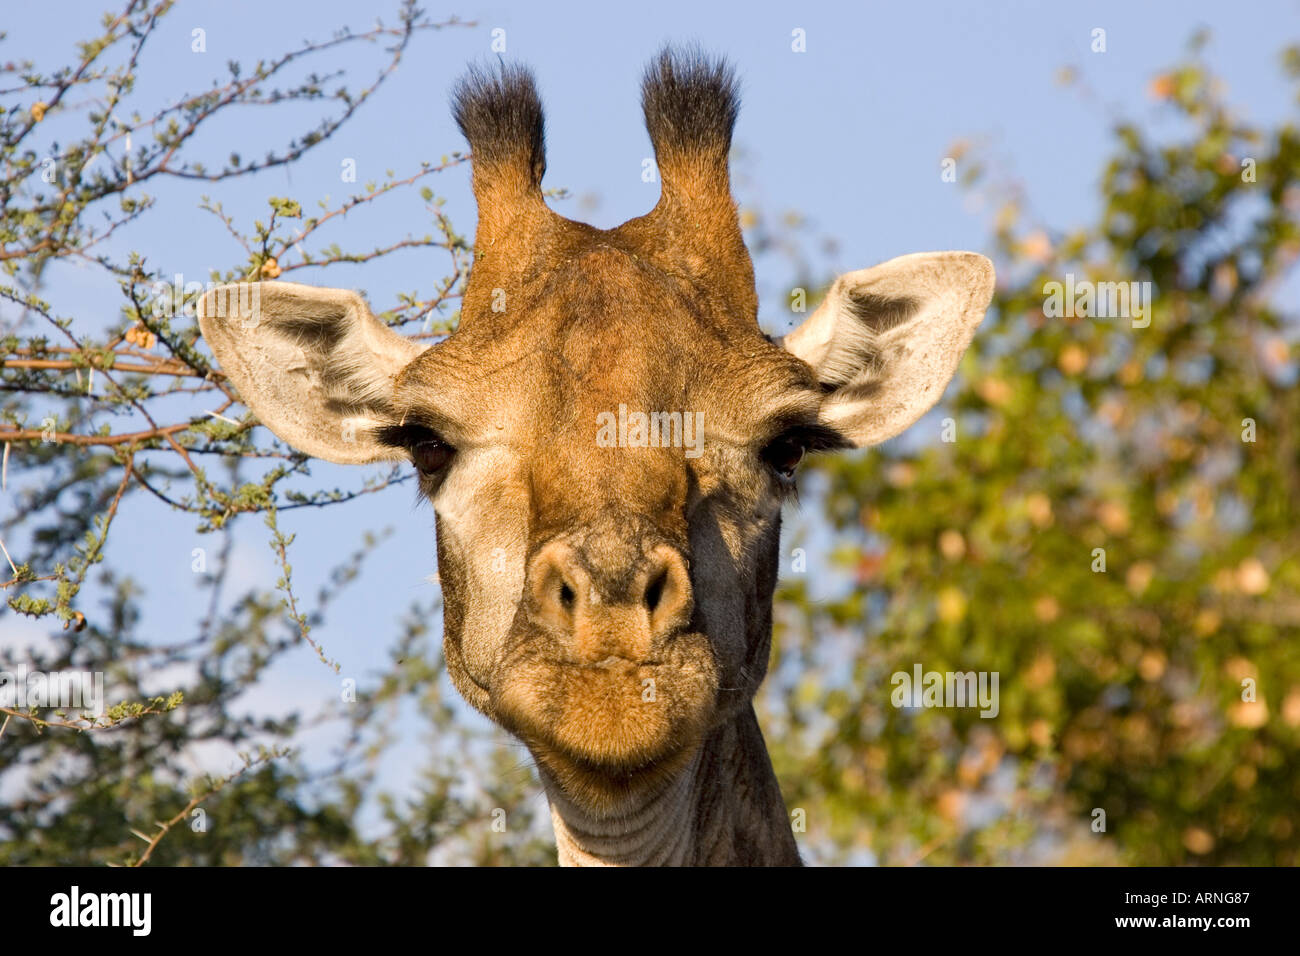 giraffe (Giraffa camelopardalis), head portrait, South Africa, Kruger NP, Jul 05. Stock Photo